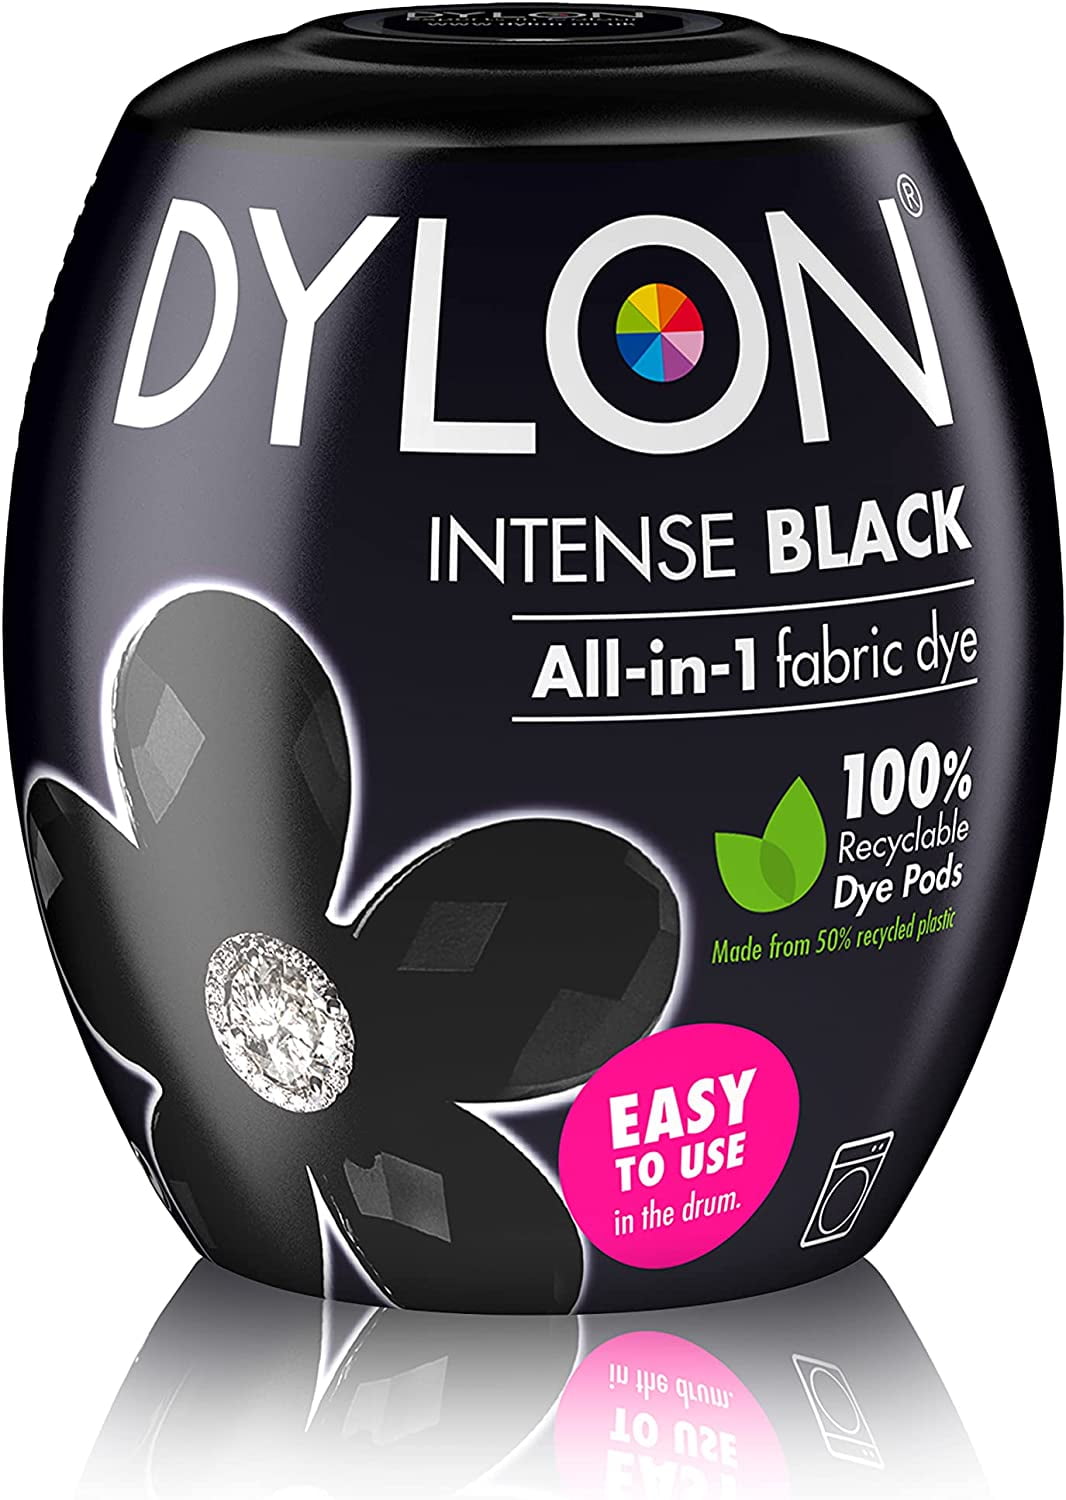 DYLON Fabric Machine Wash Dye - 350g - Trimming Shop